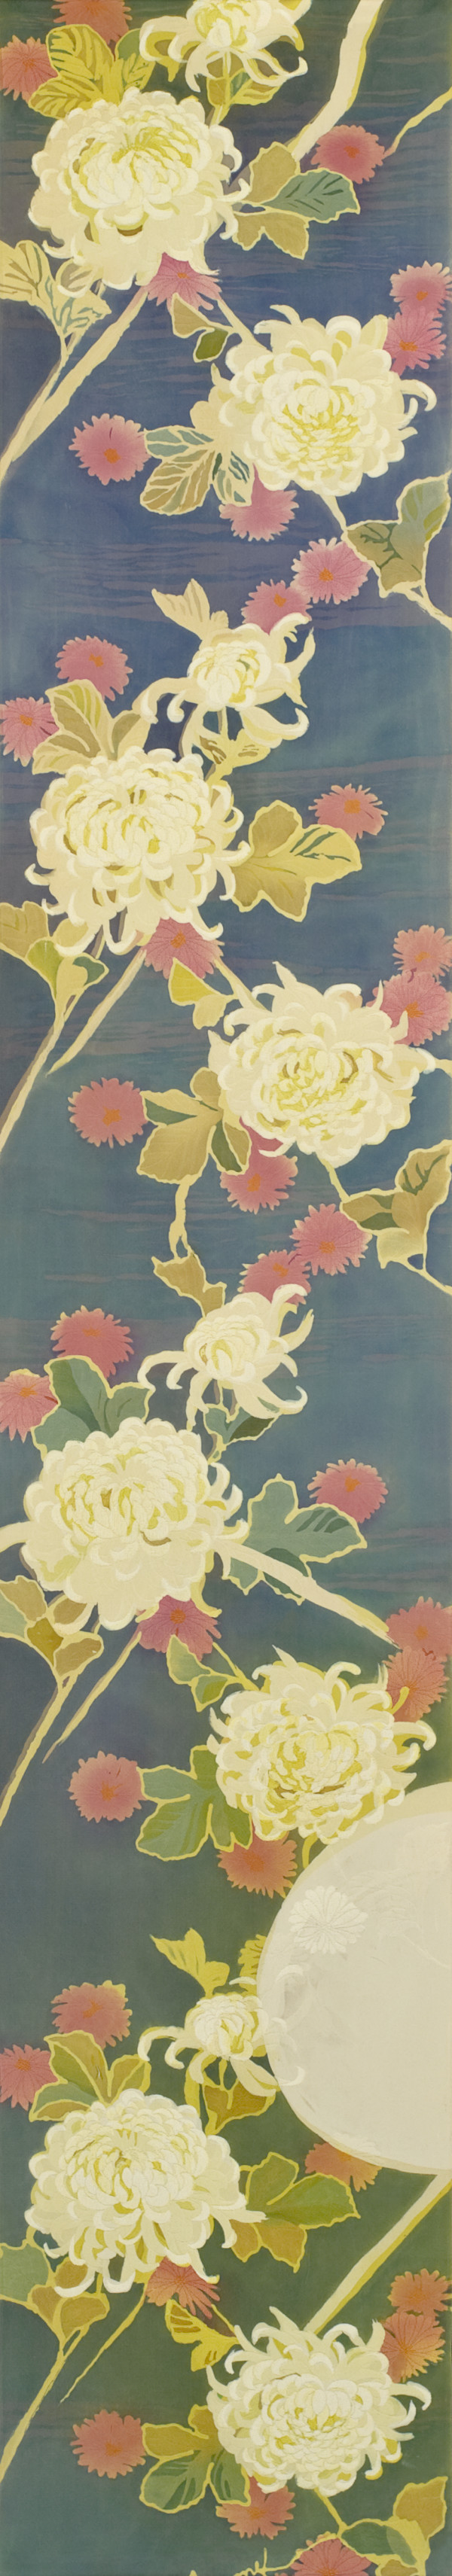 Moonlit Chrysanthemums by Mary Edna Fraser